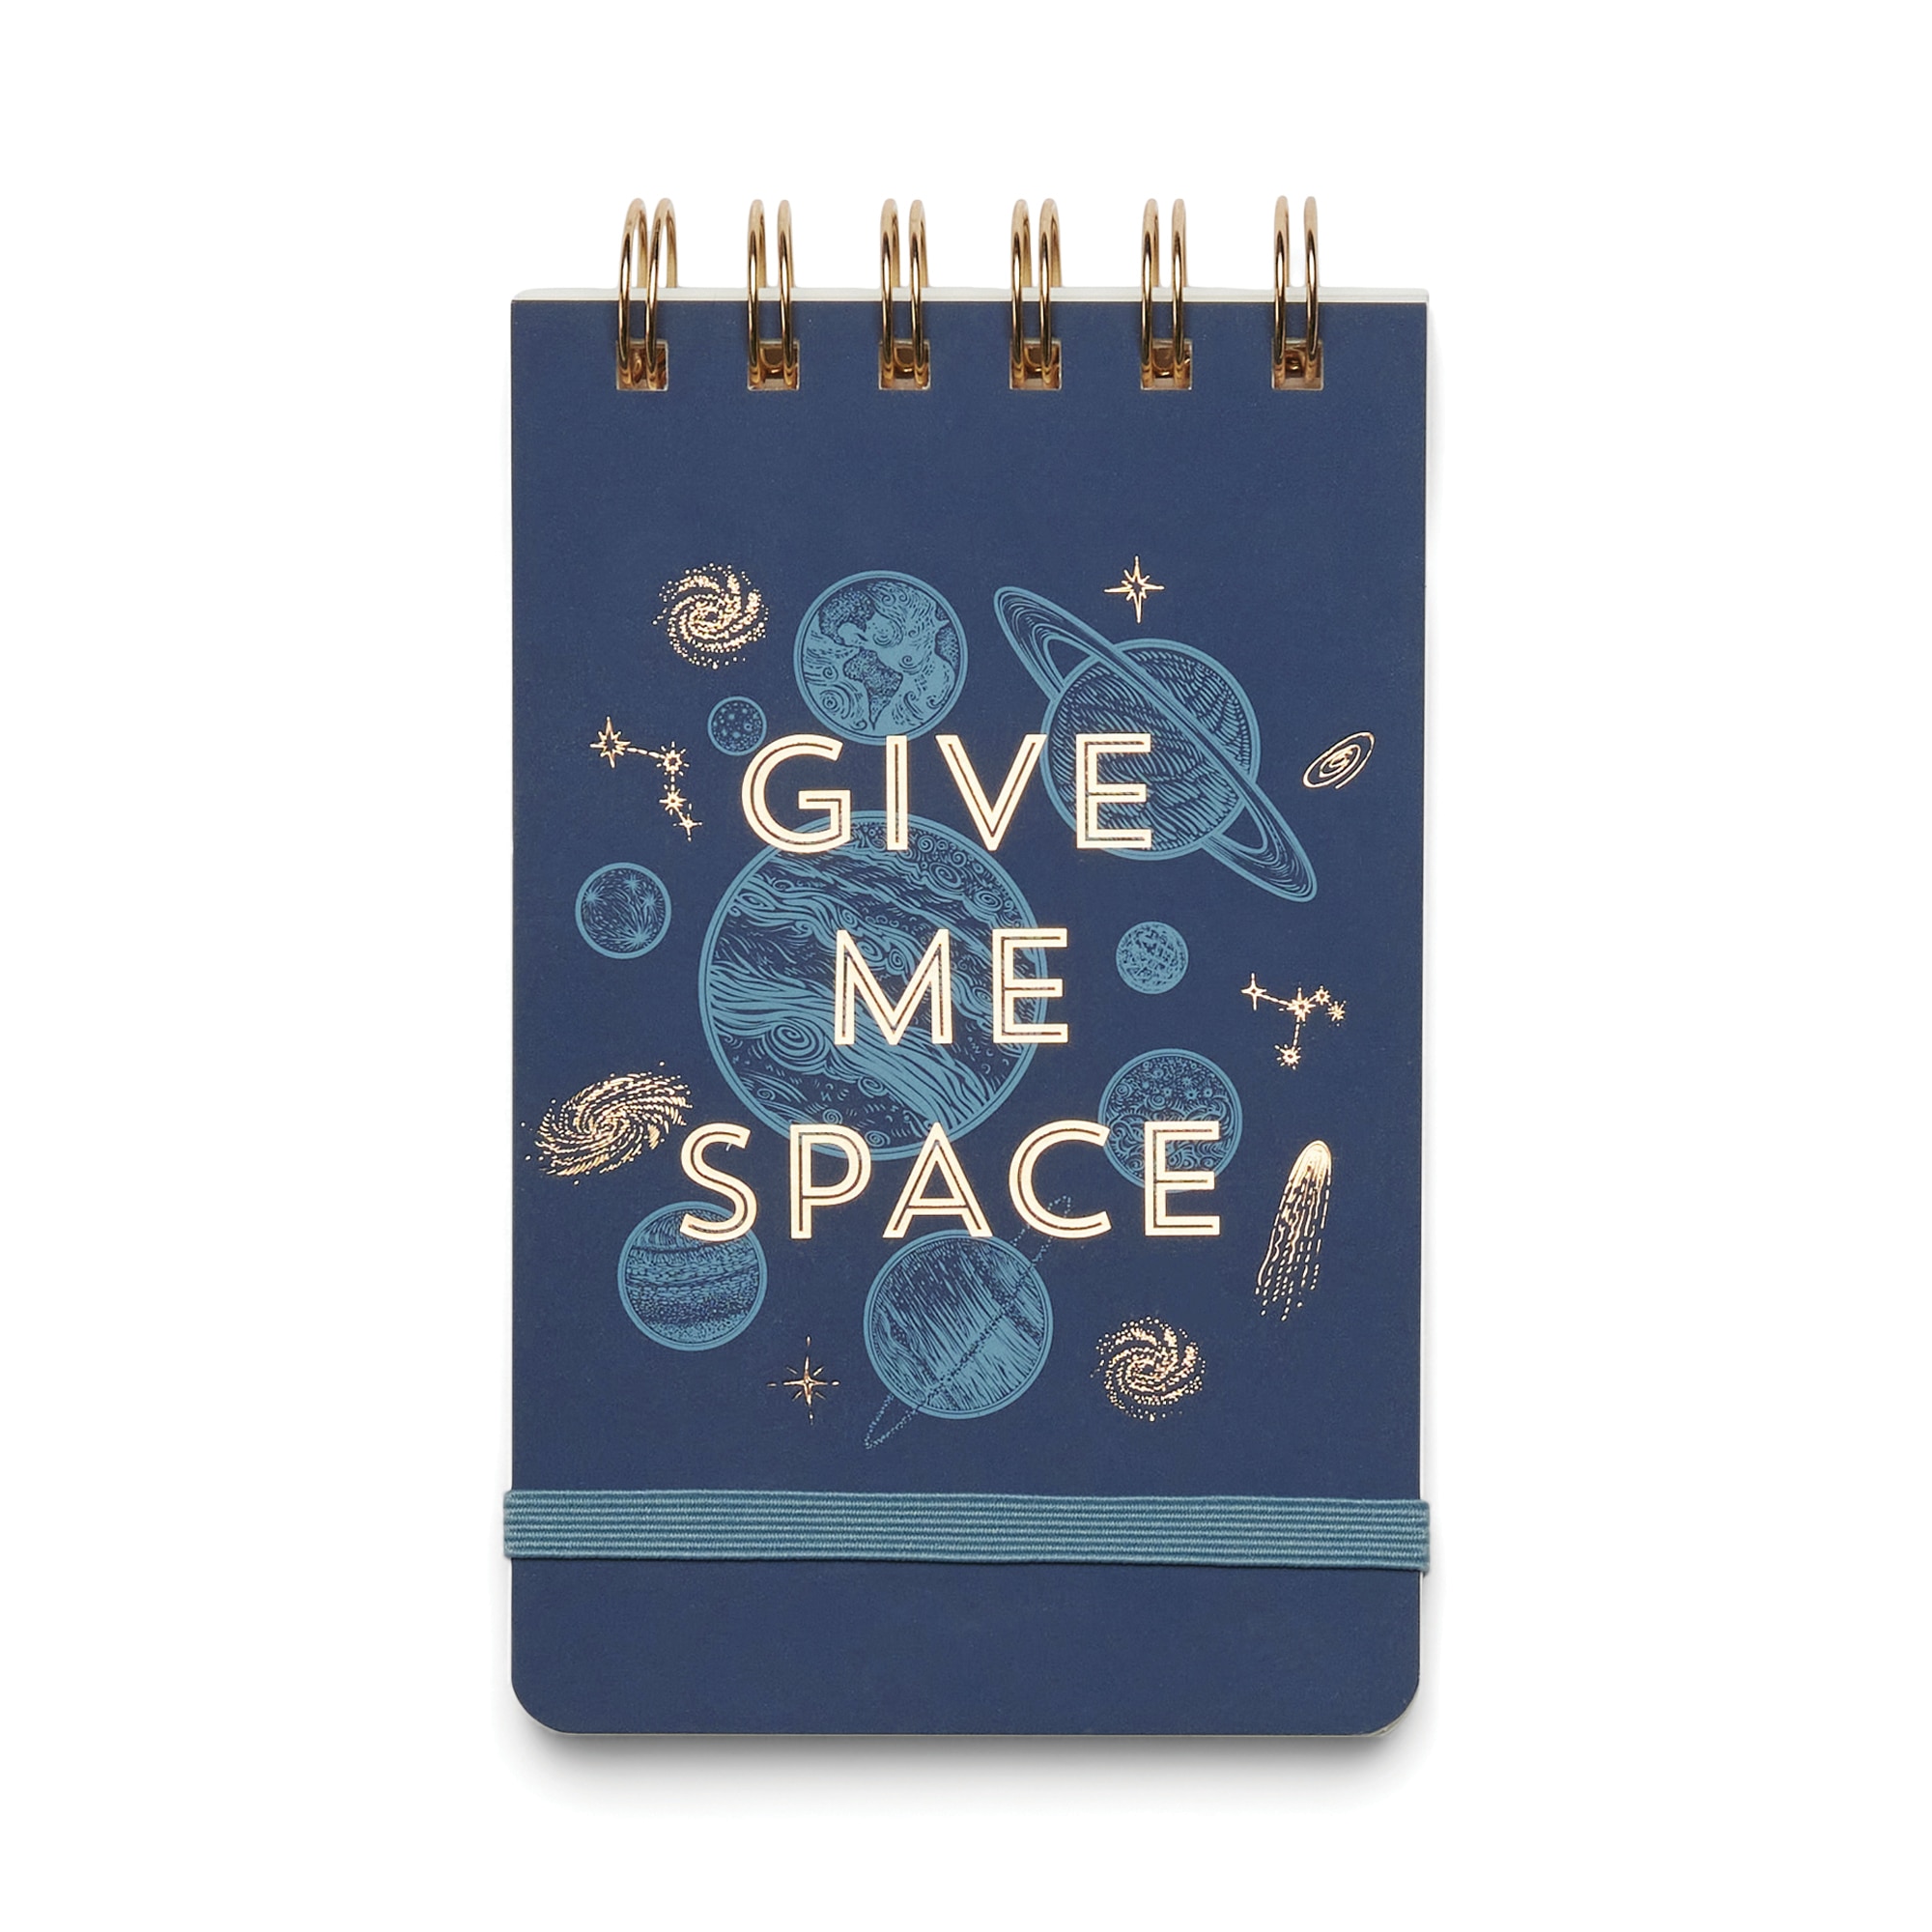 Designworks Vintage Sass Notepad, Give Me Space 3.5 x 5.75